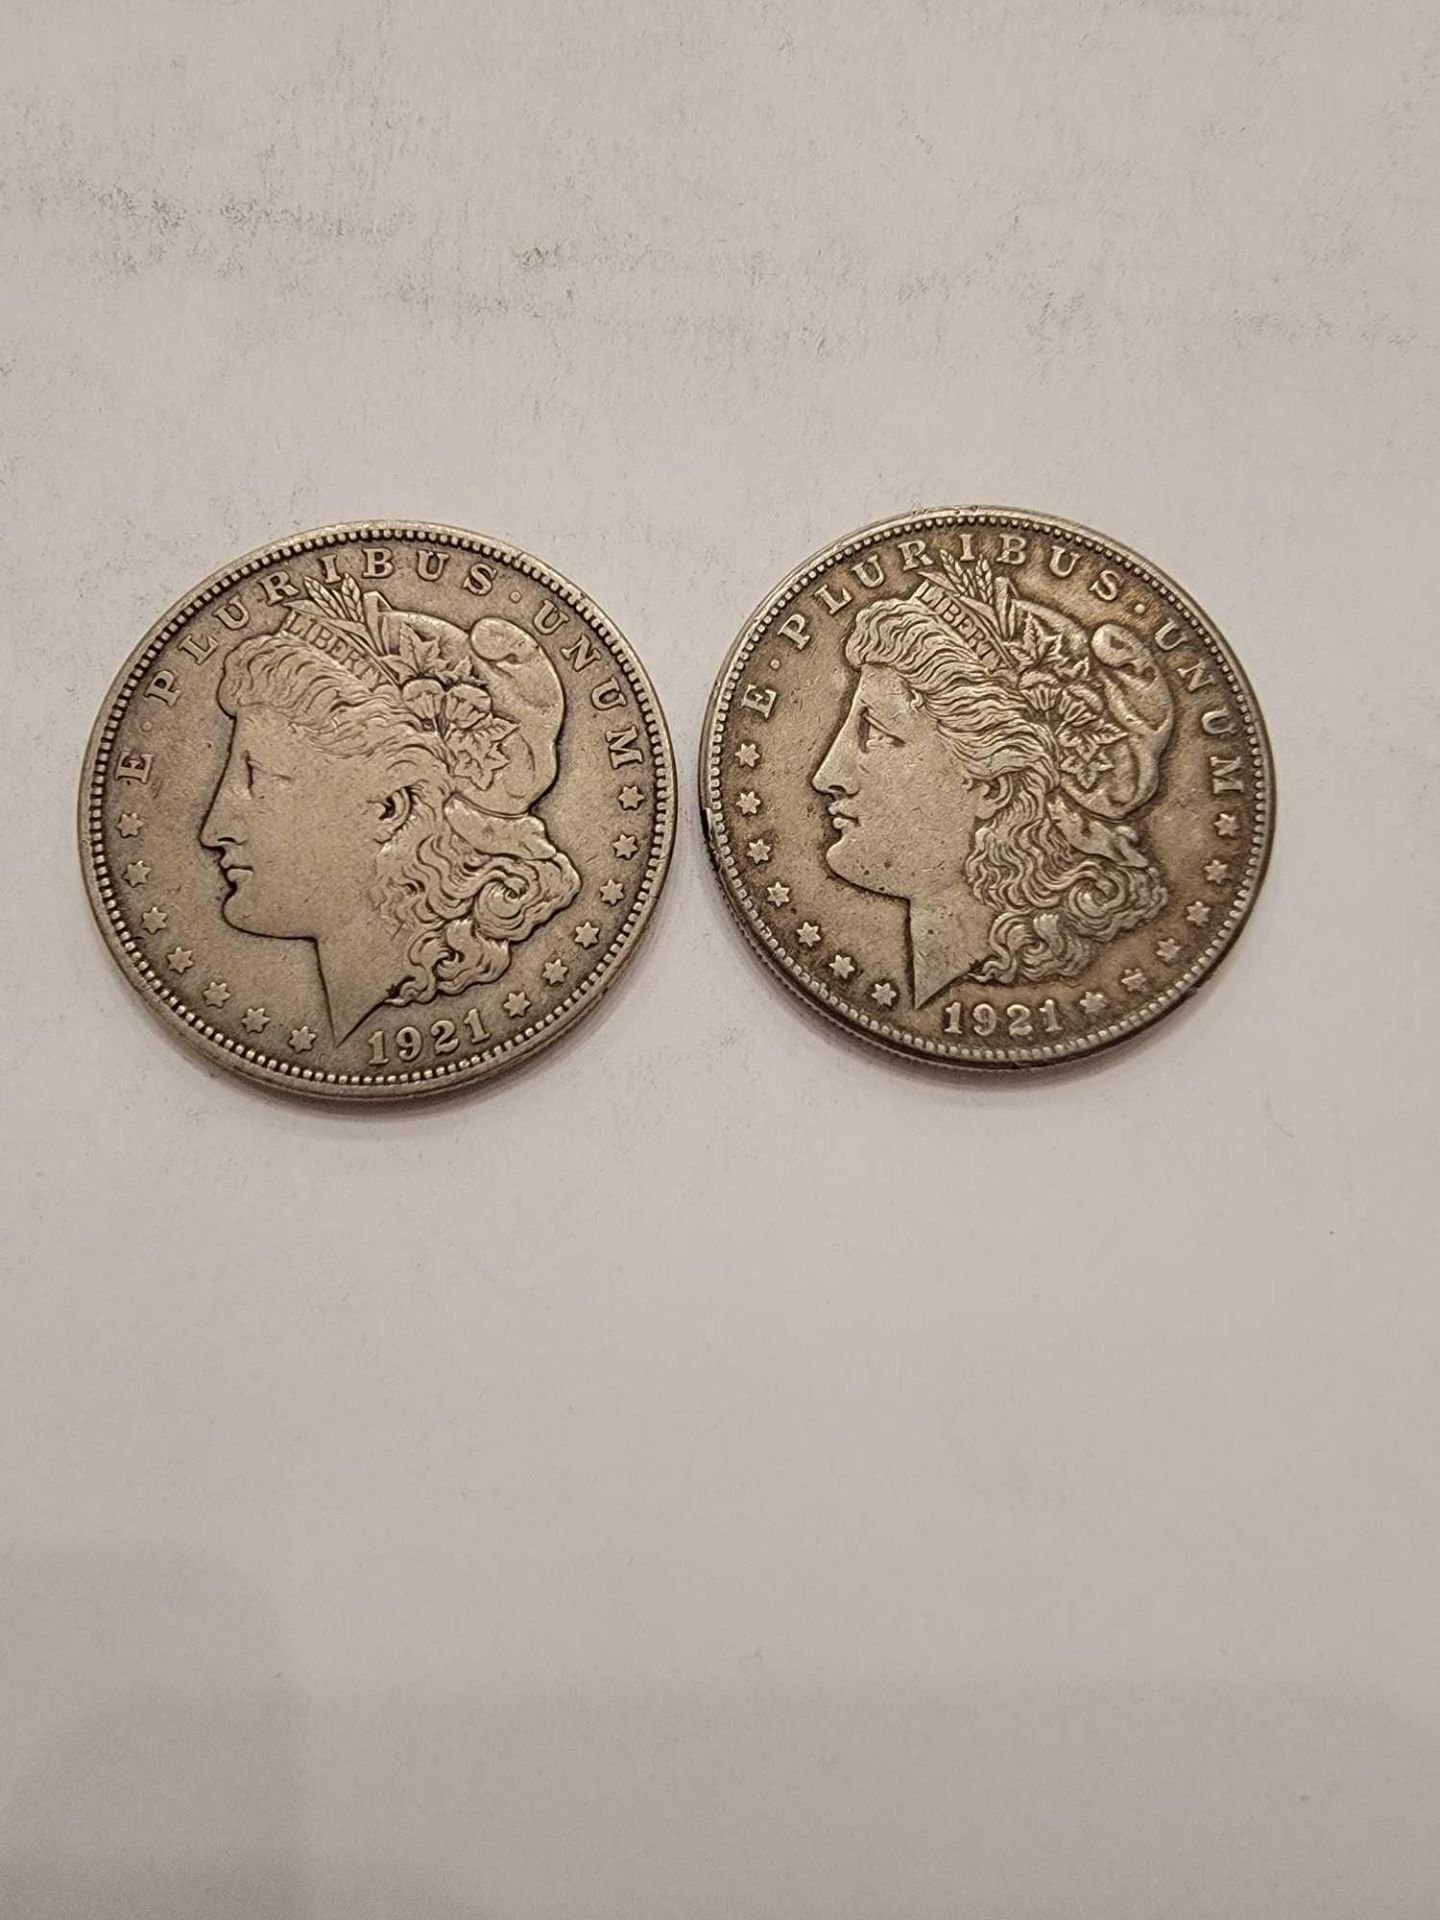 2 1921 Morgan Dollars